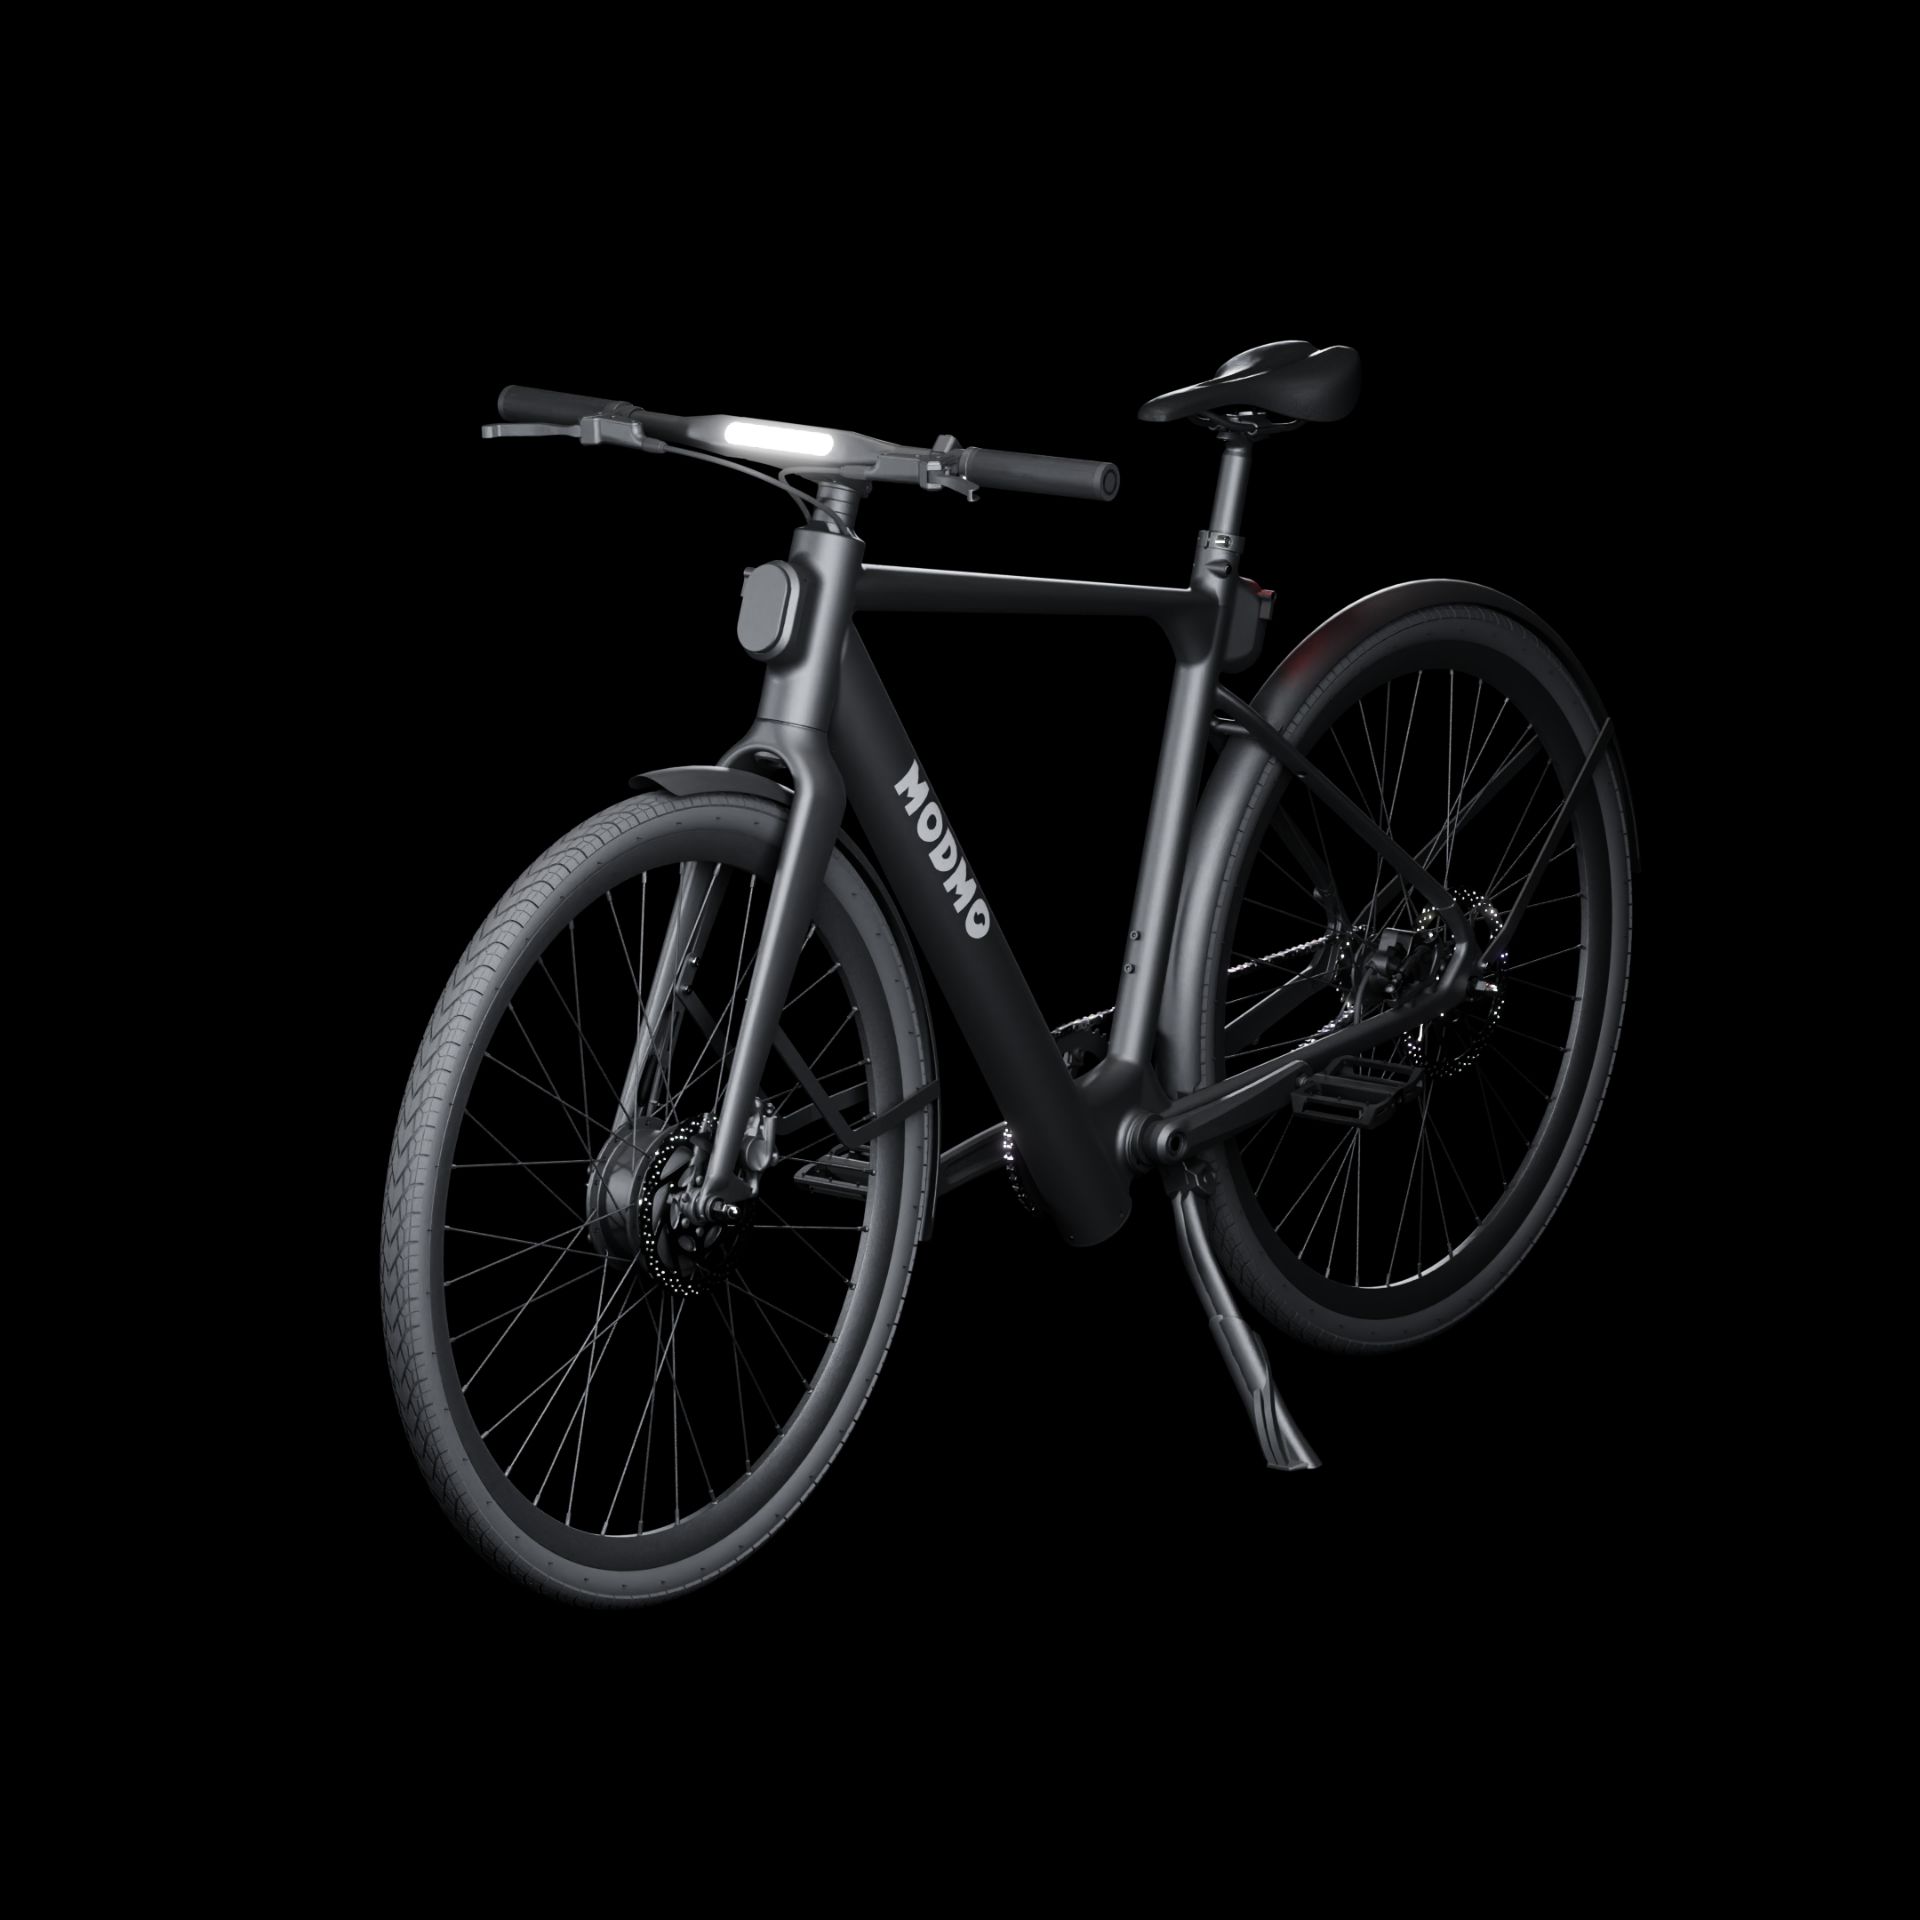 Modmo Saigon+ Electric Bicycle - RRP £2800 - Size M (Rider: 140-155cm) - Image 3 of 19